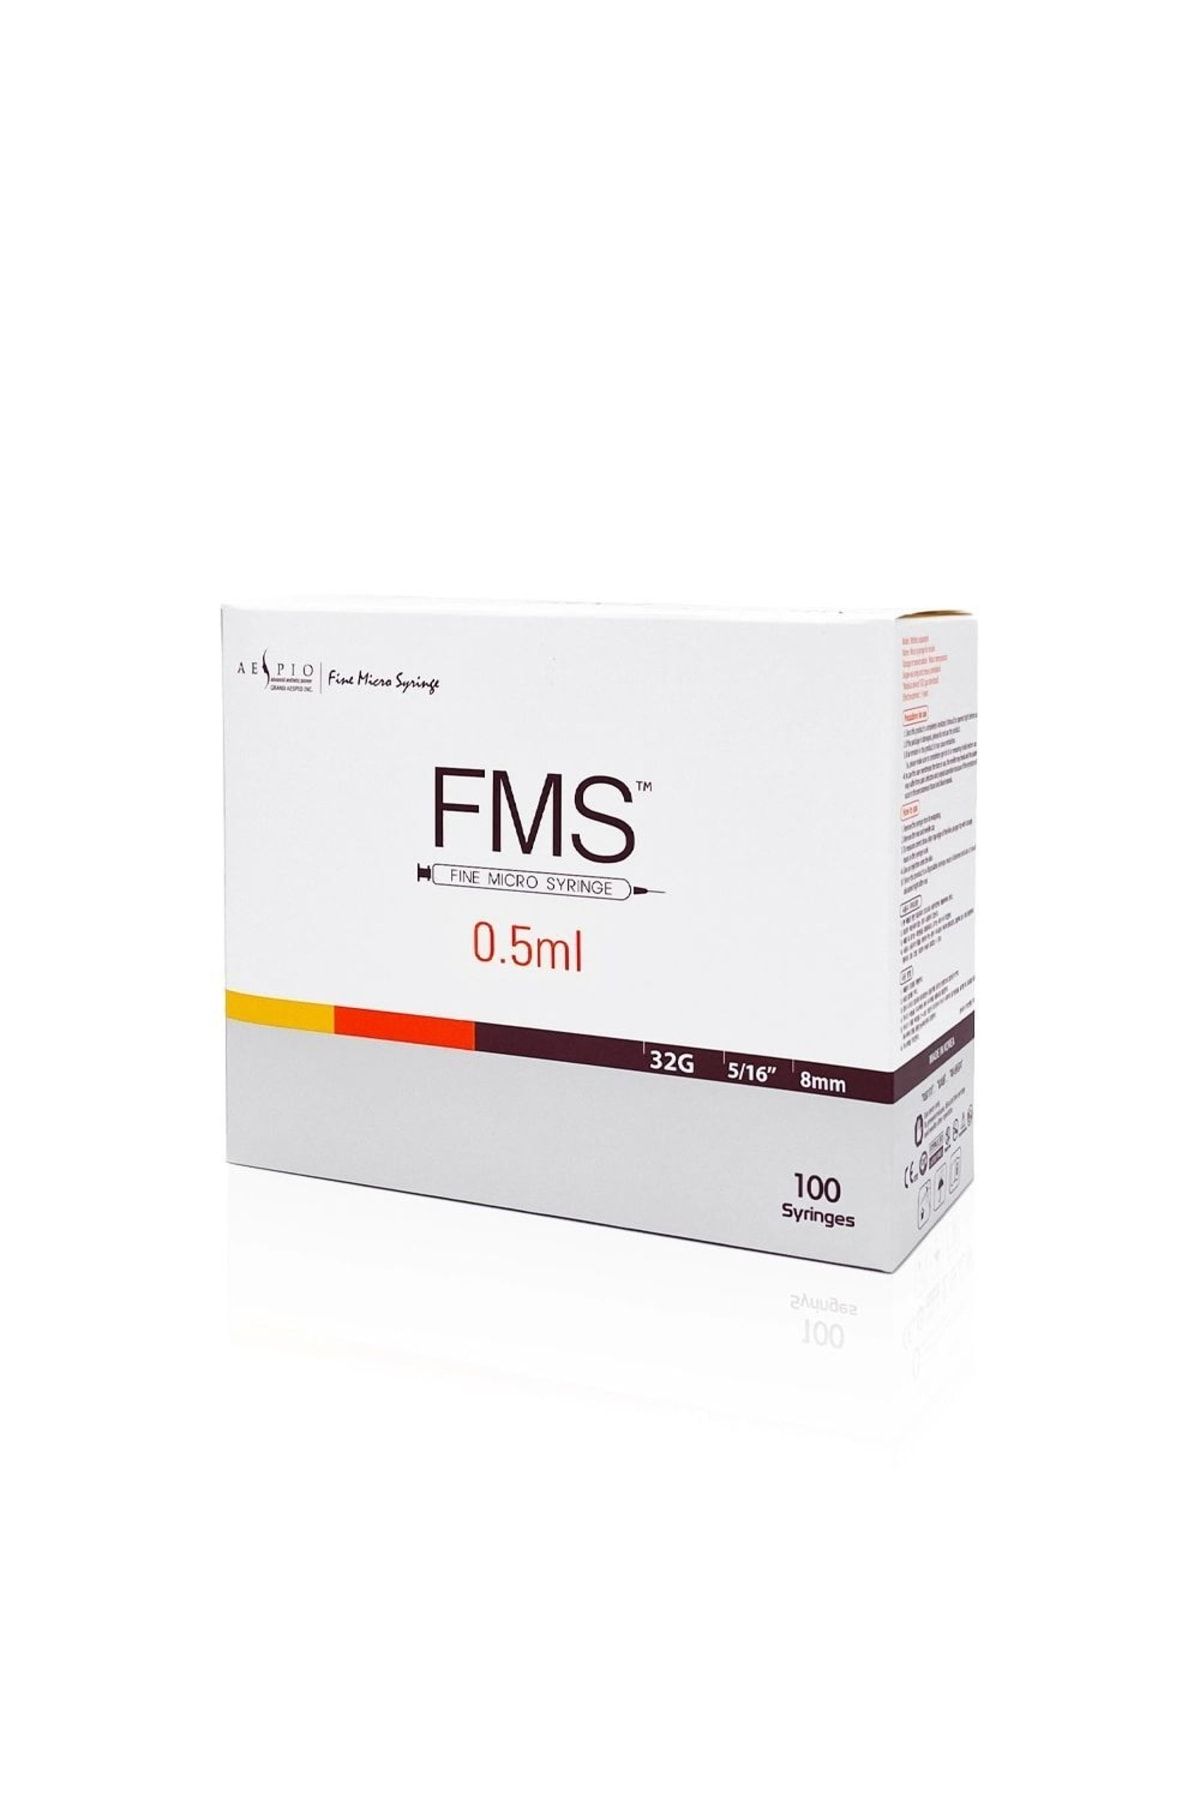 FMS Micro Fine Insülin Enjektörü 0.5 Ml Enjektör Şırınga (32g X 8mm) - 100 Adet